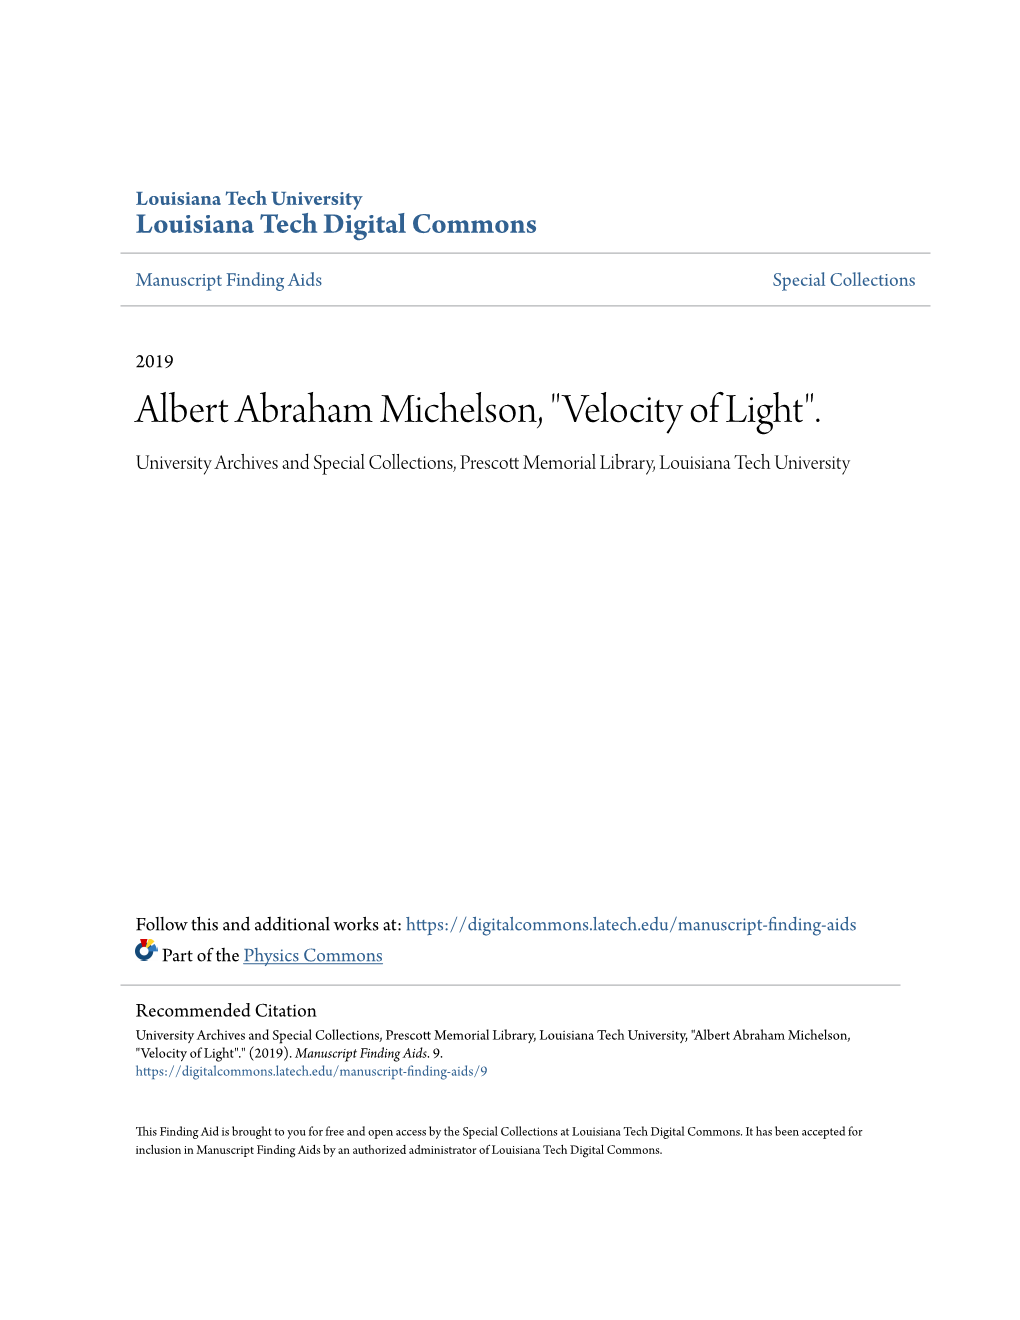 Albert Abraham Michelson, "Velocity of Light"